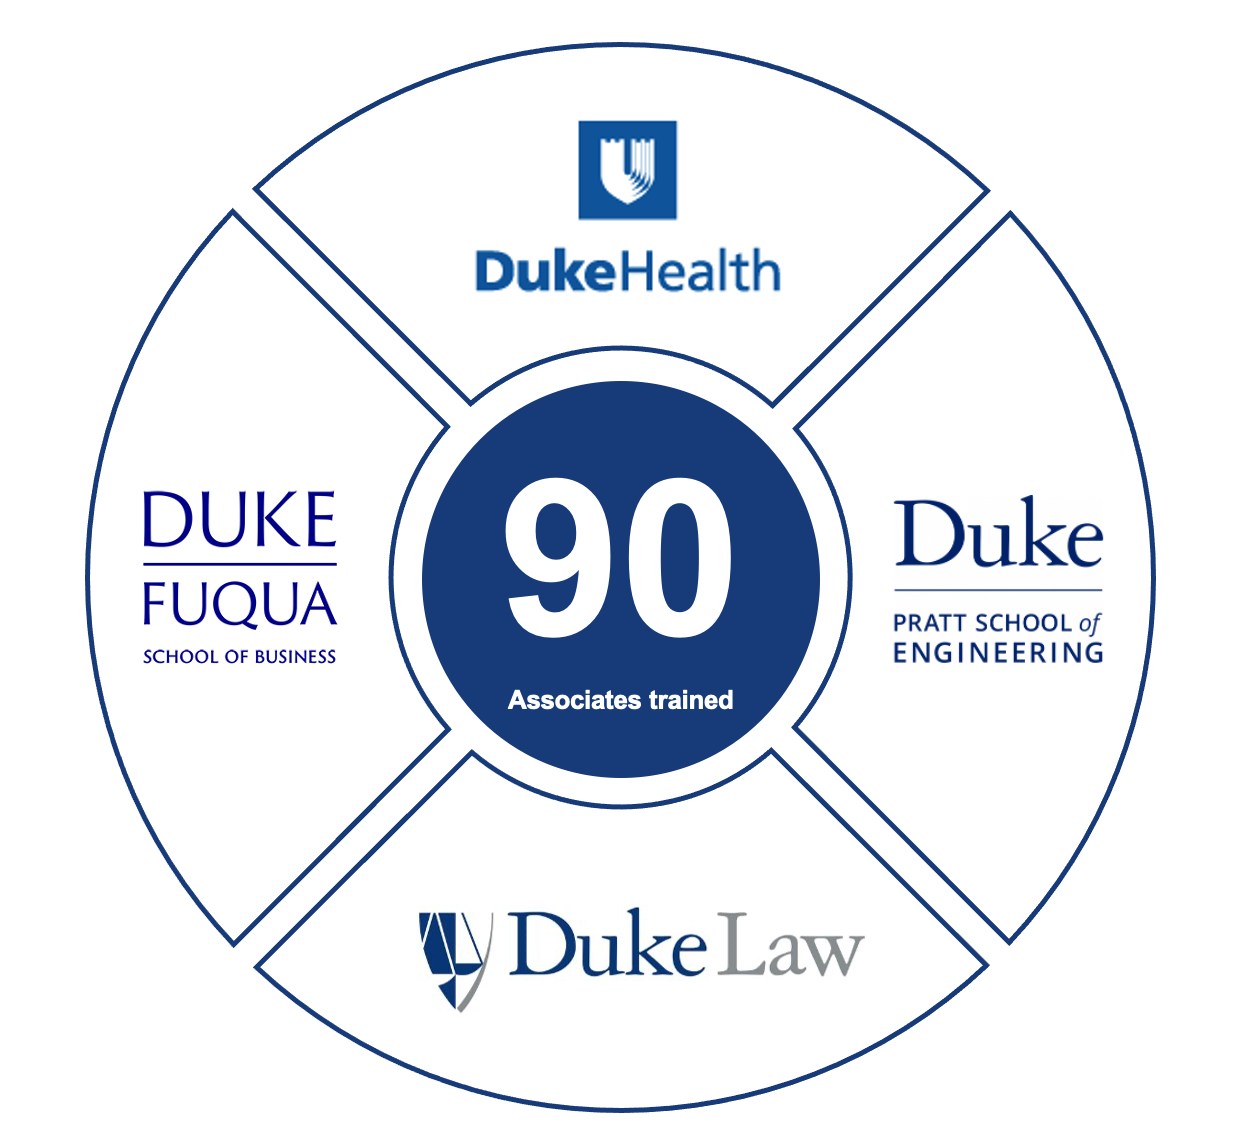 Circular graphic of Duke Health, Duke Fuqua Business School, Duke Law School, and Duke Pratt School of Engineering. The logos surround a central text box that reads "90 Associates trained".